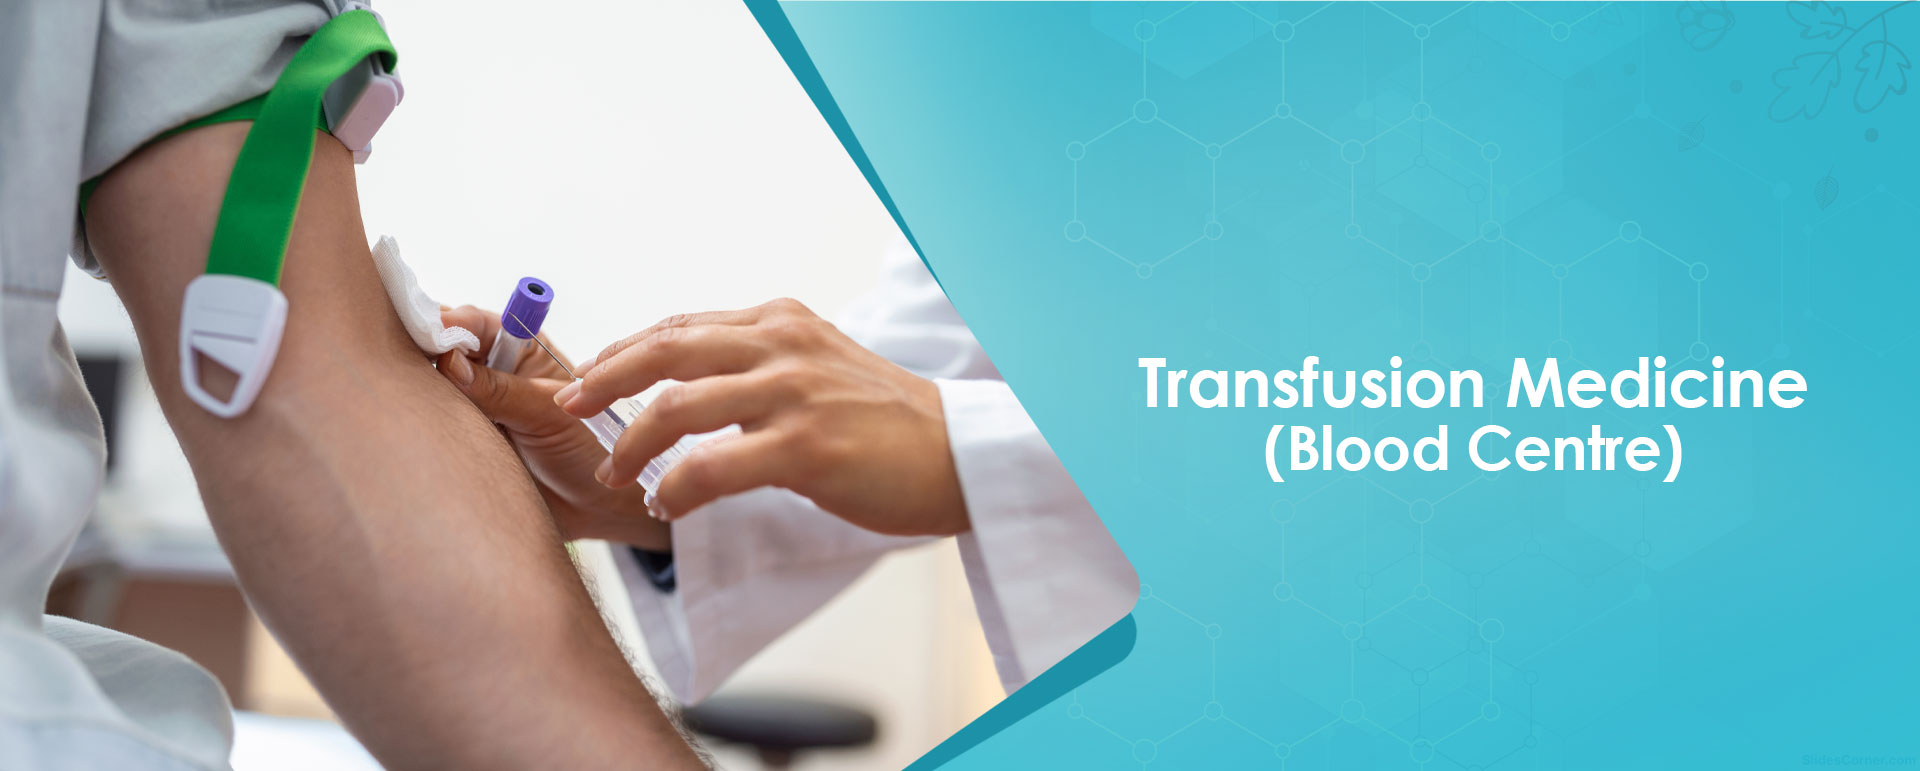 Transfusion Medicine (Blood Centre)